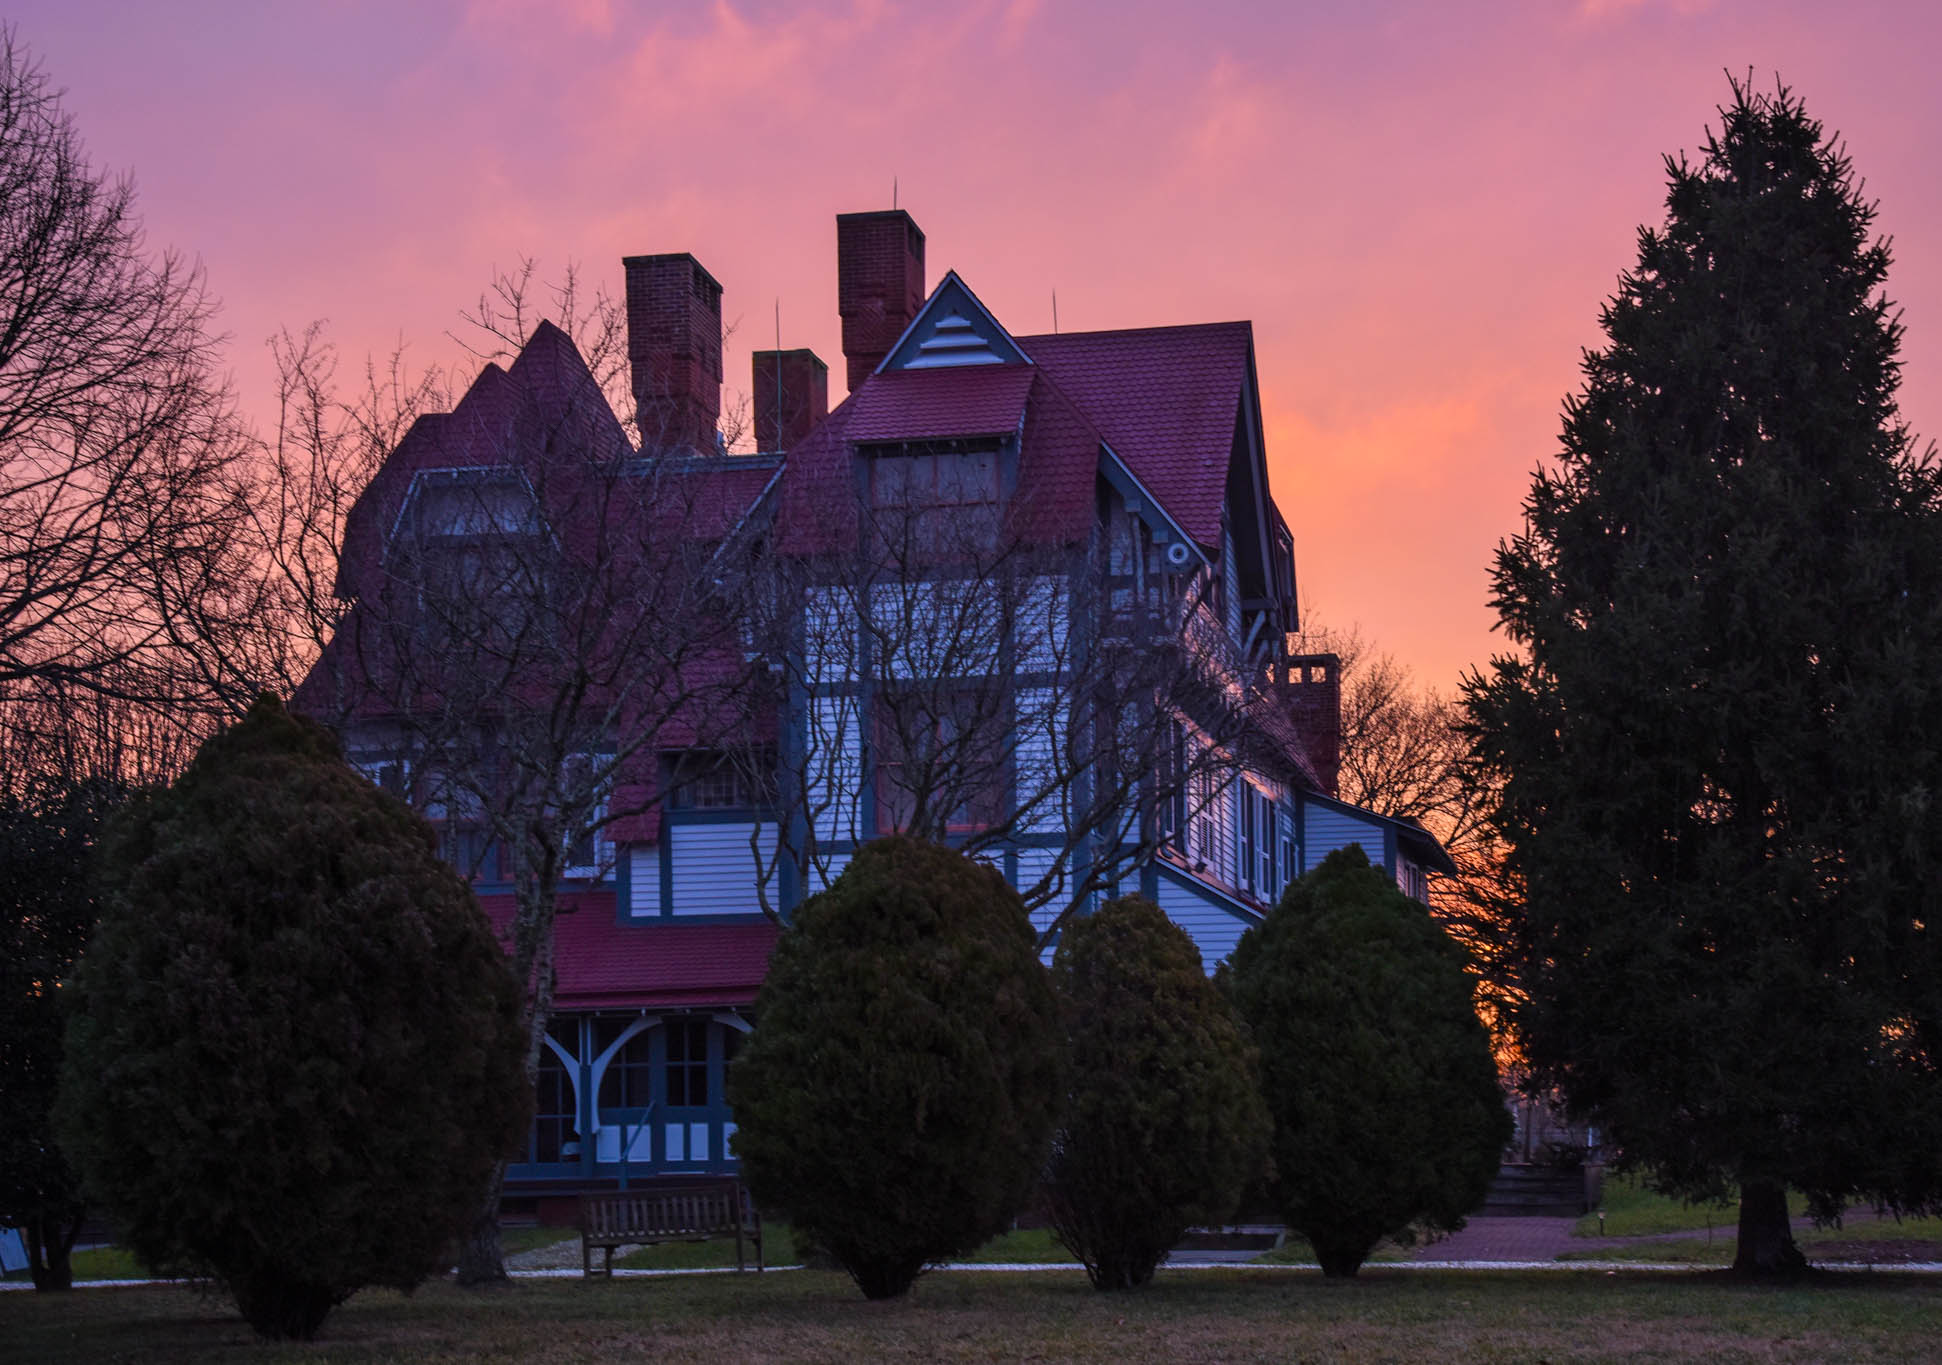 Emlen Physick Estate during a pink sunrise